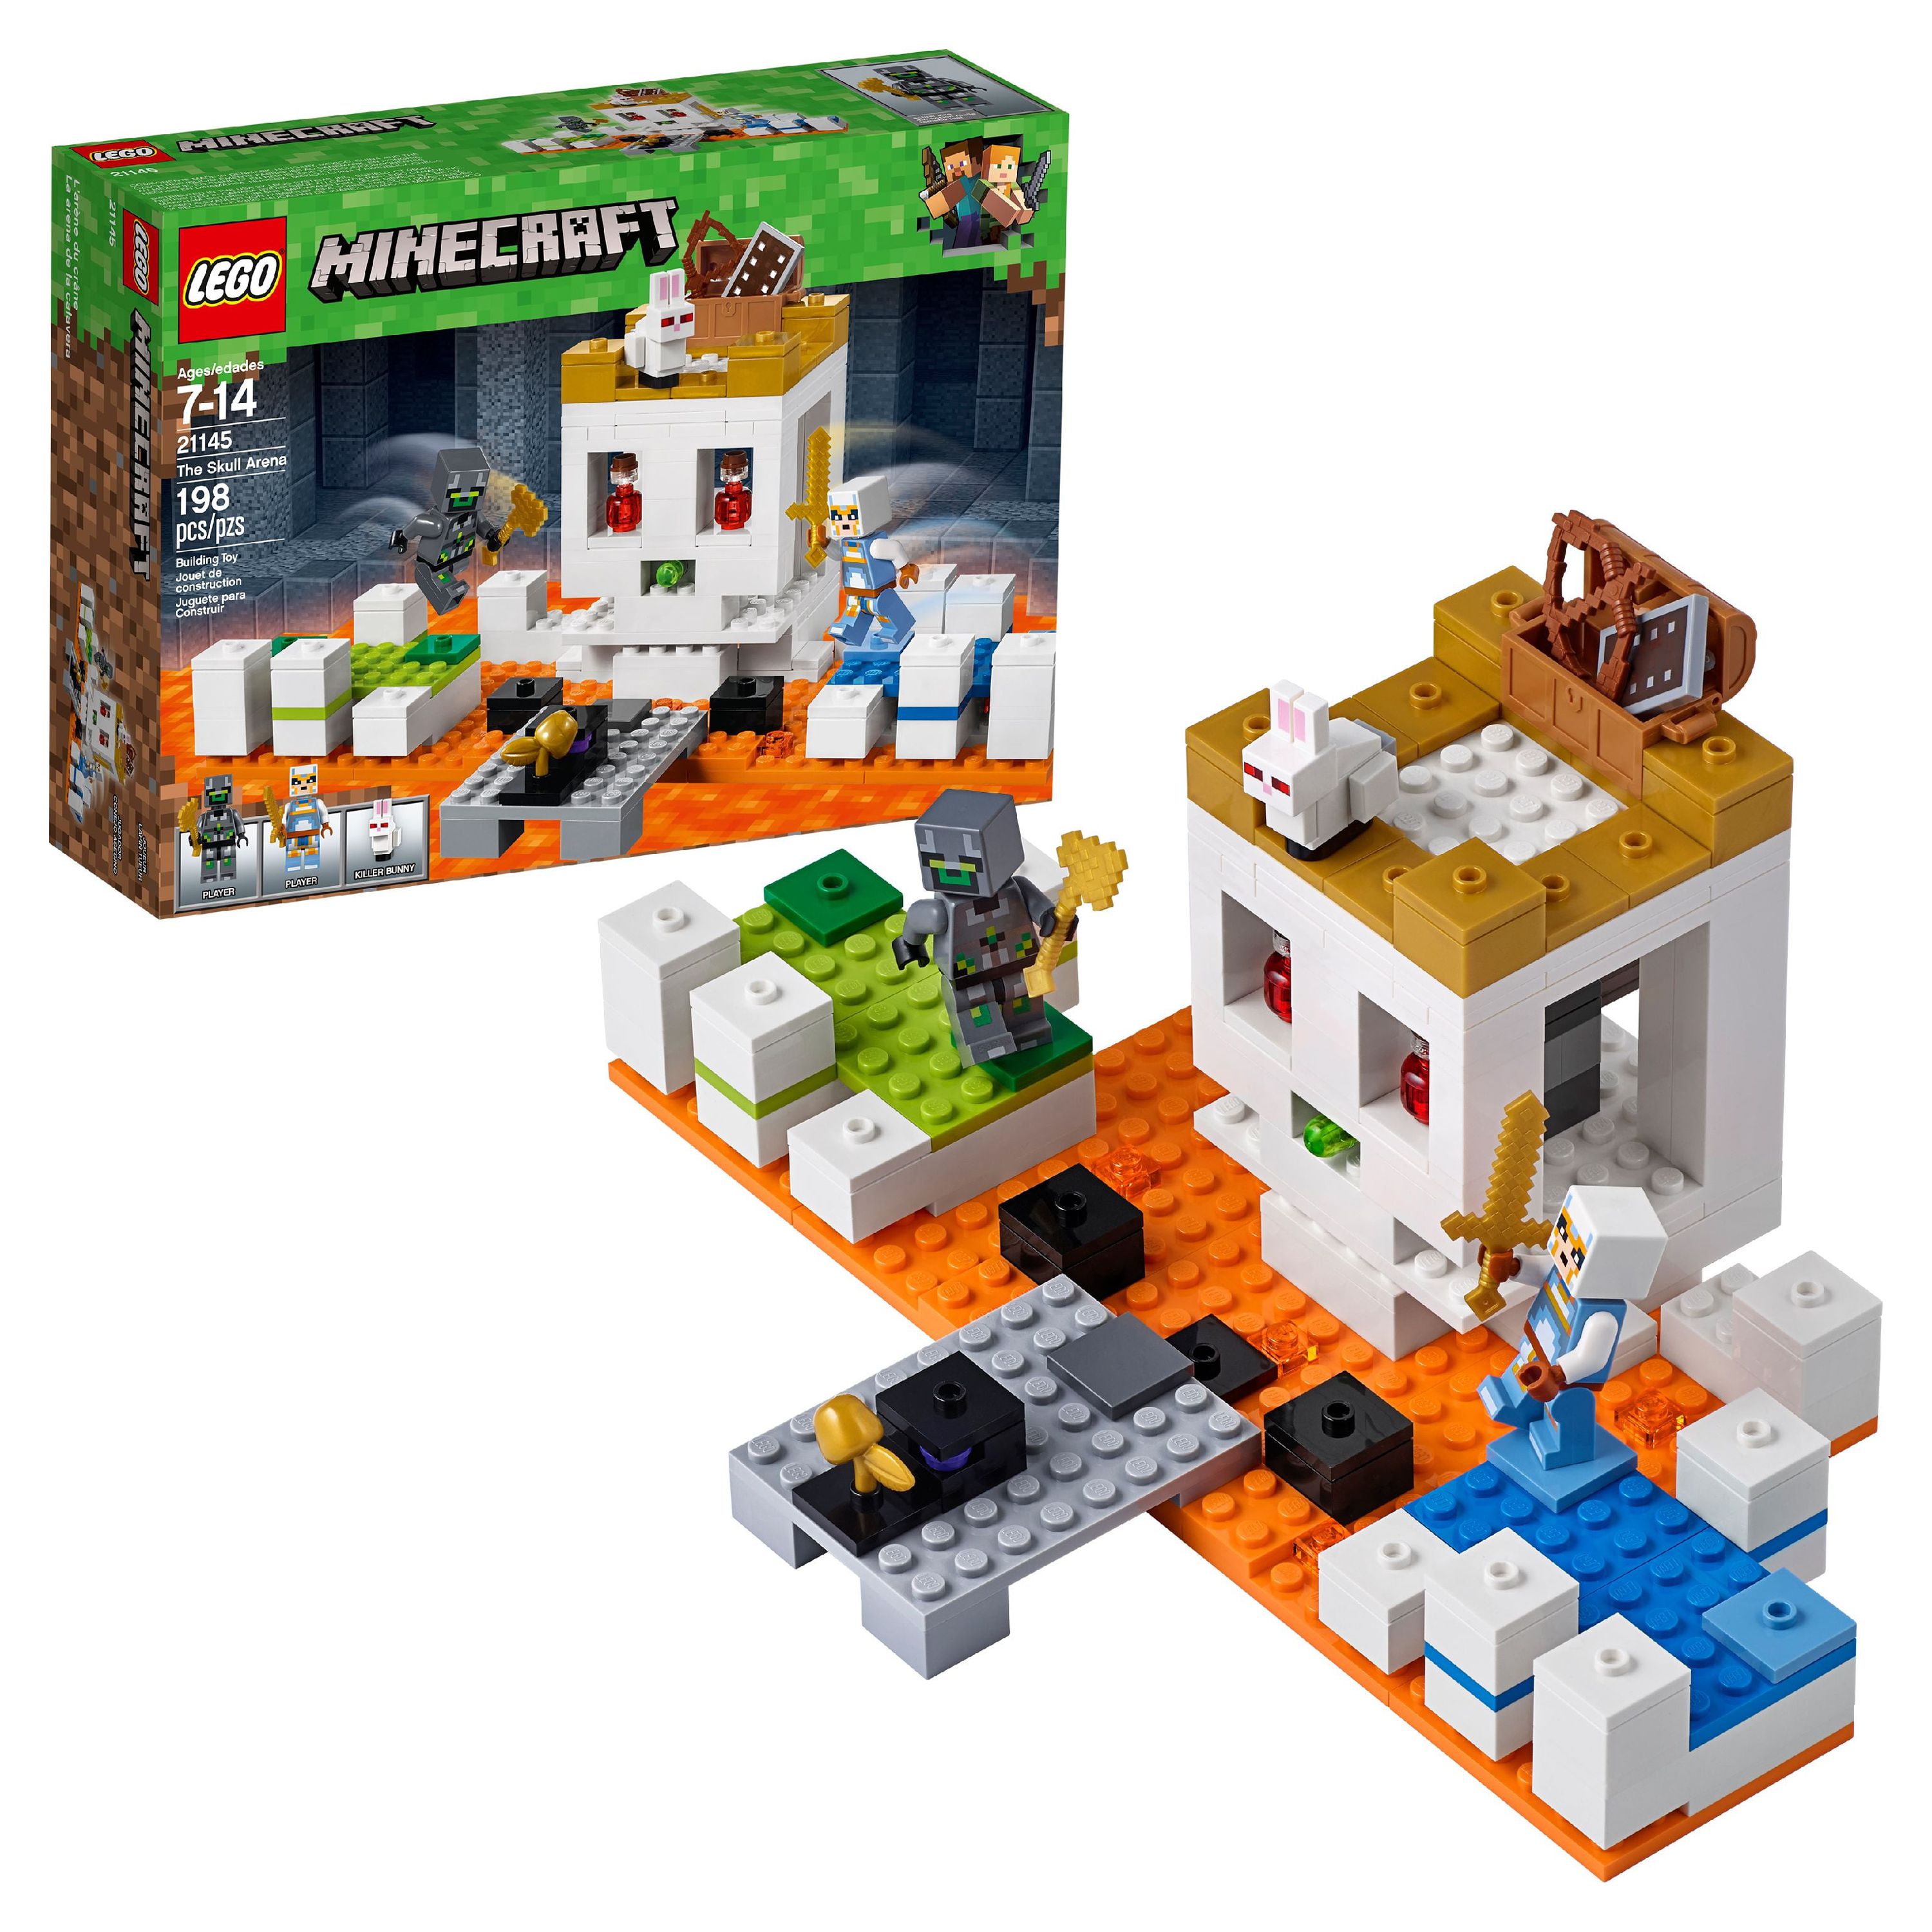 LEGO Minecraft The Skull Arena 21145 - image 1 of 7